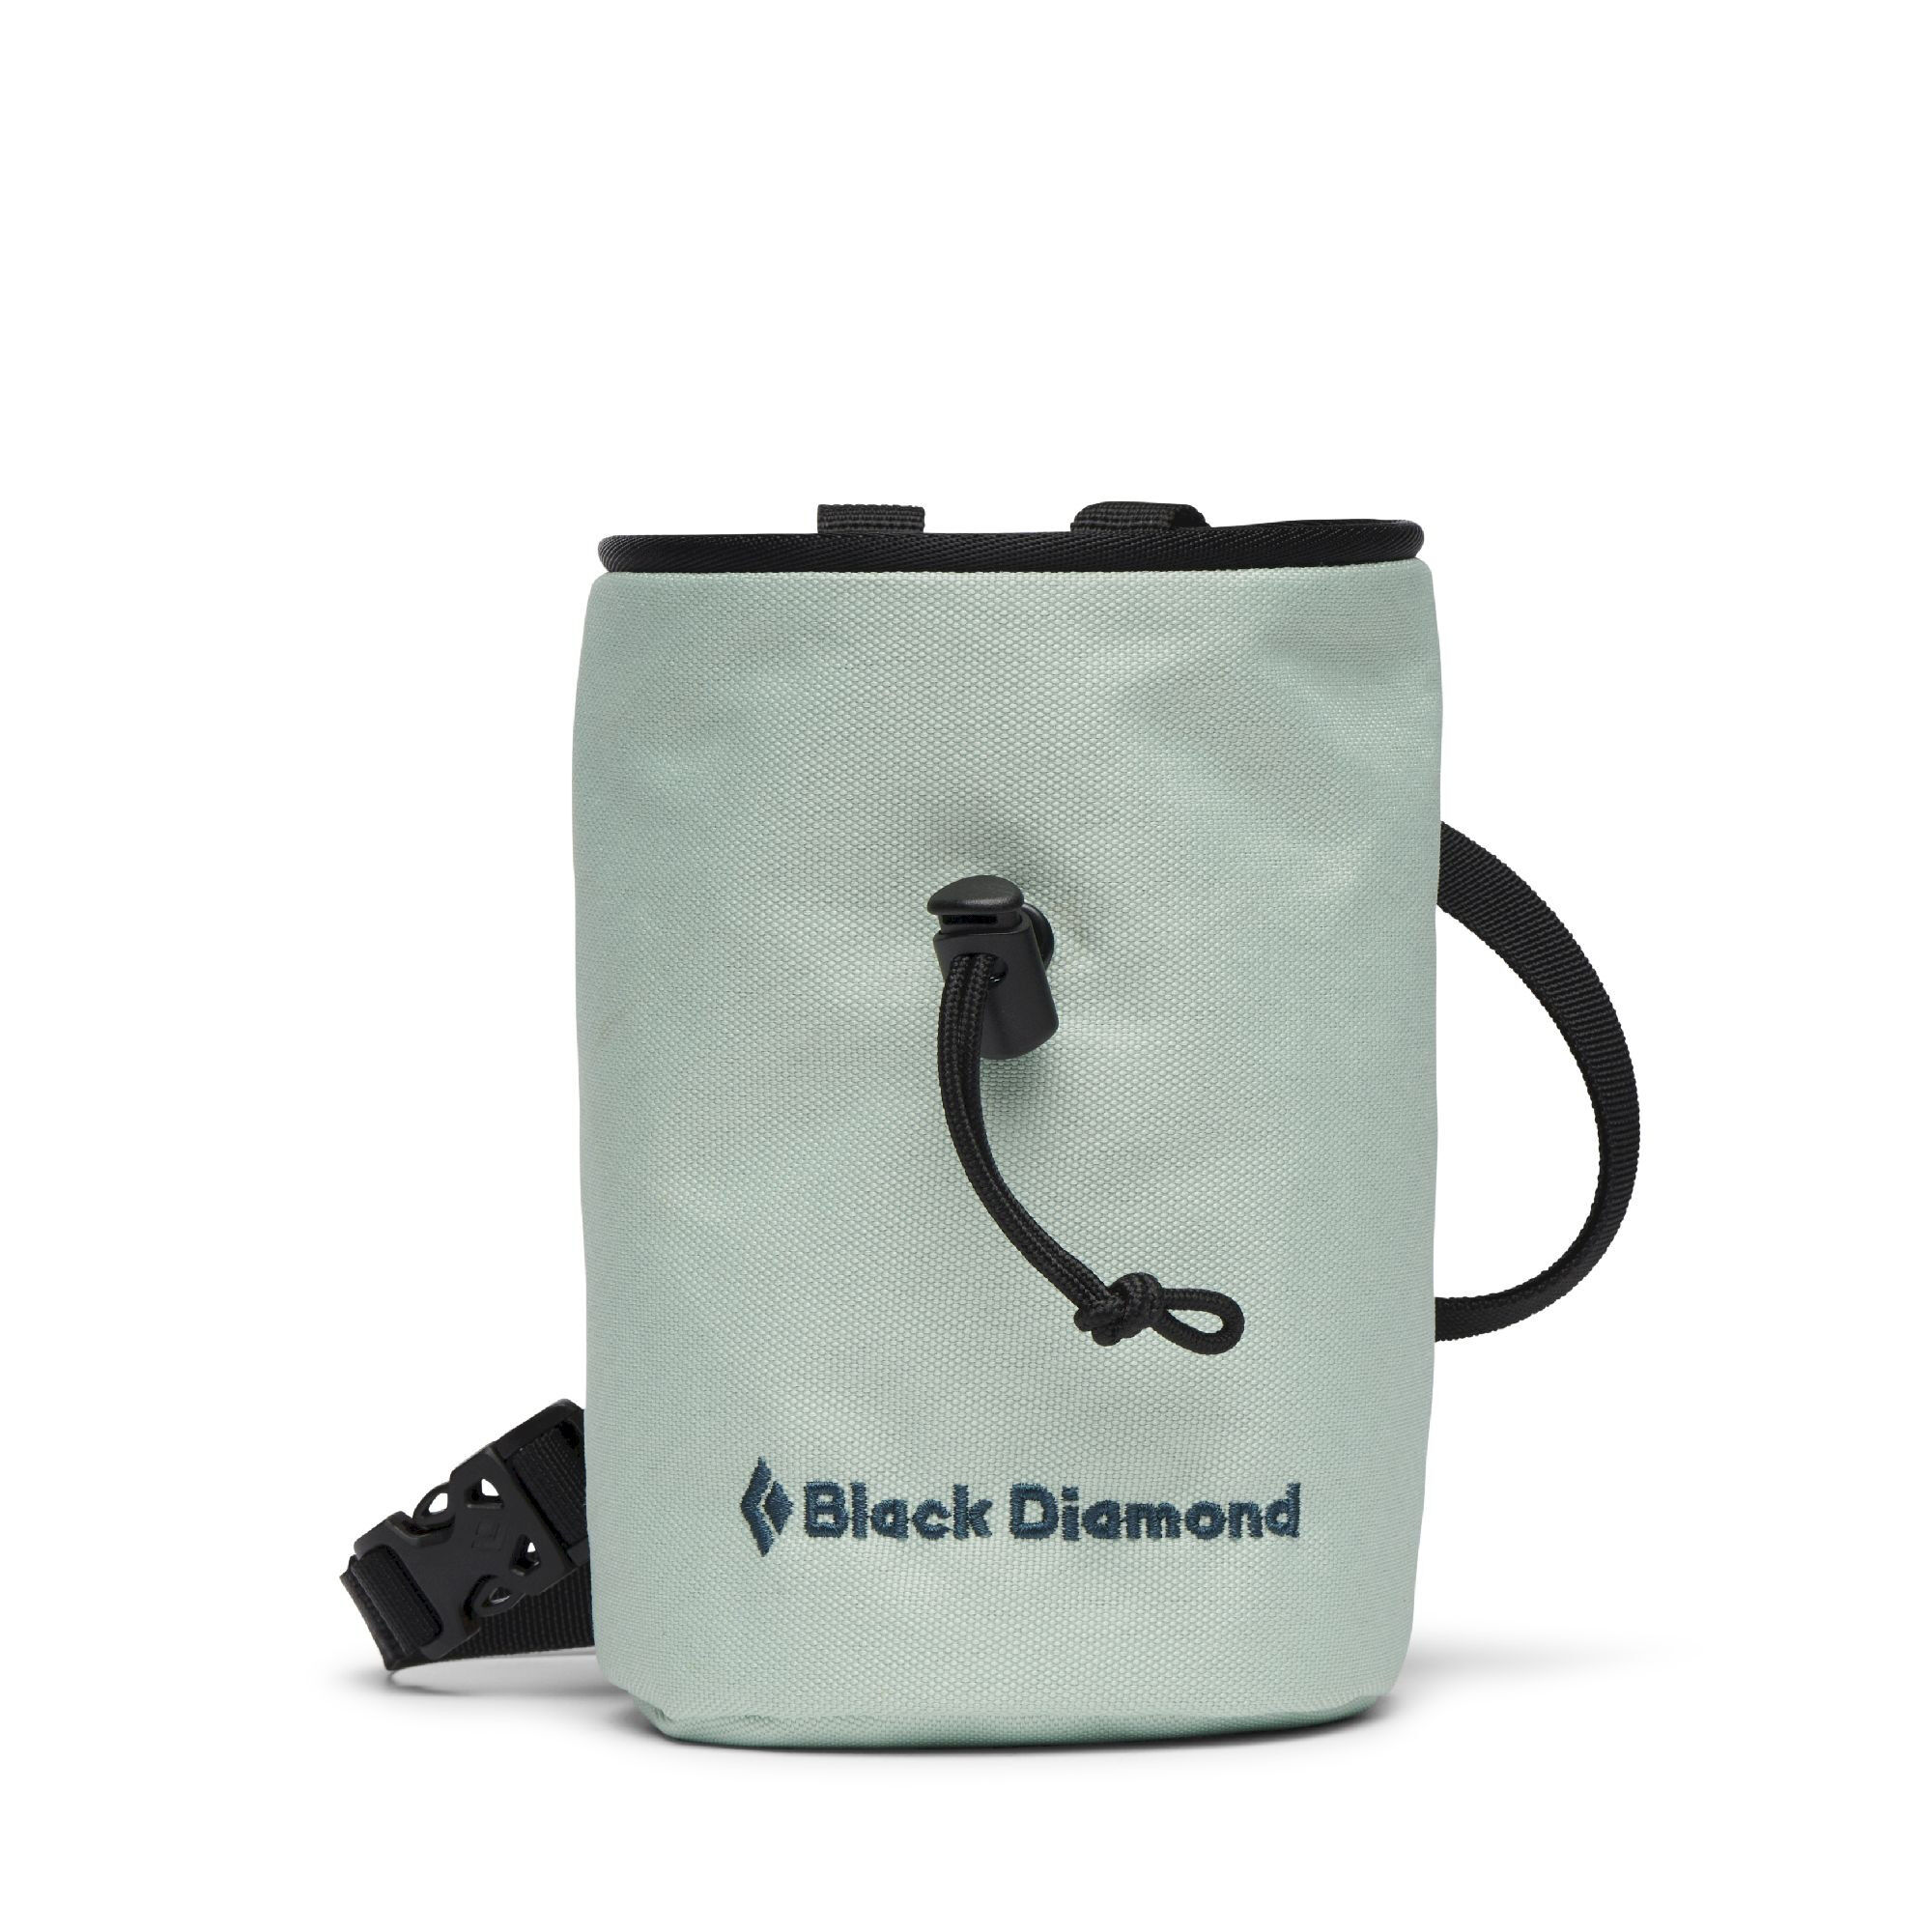 Black Diamond Mojo Chalk Bag - Chalkbag